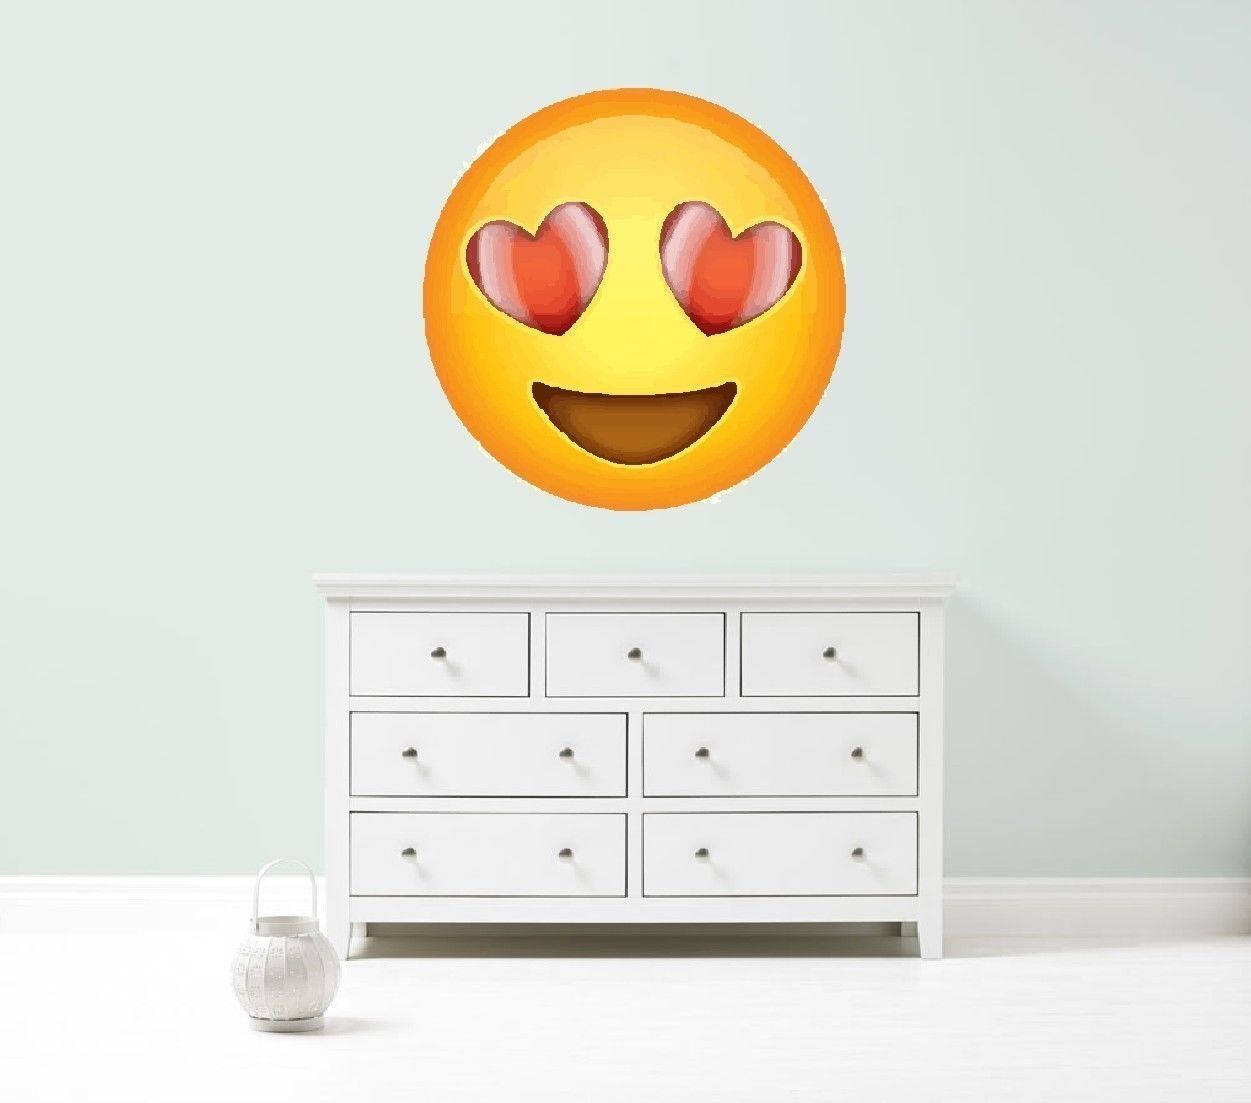 36 Emoji Fabric Wall Decals, Emoji Stickers